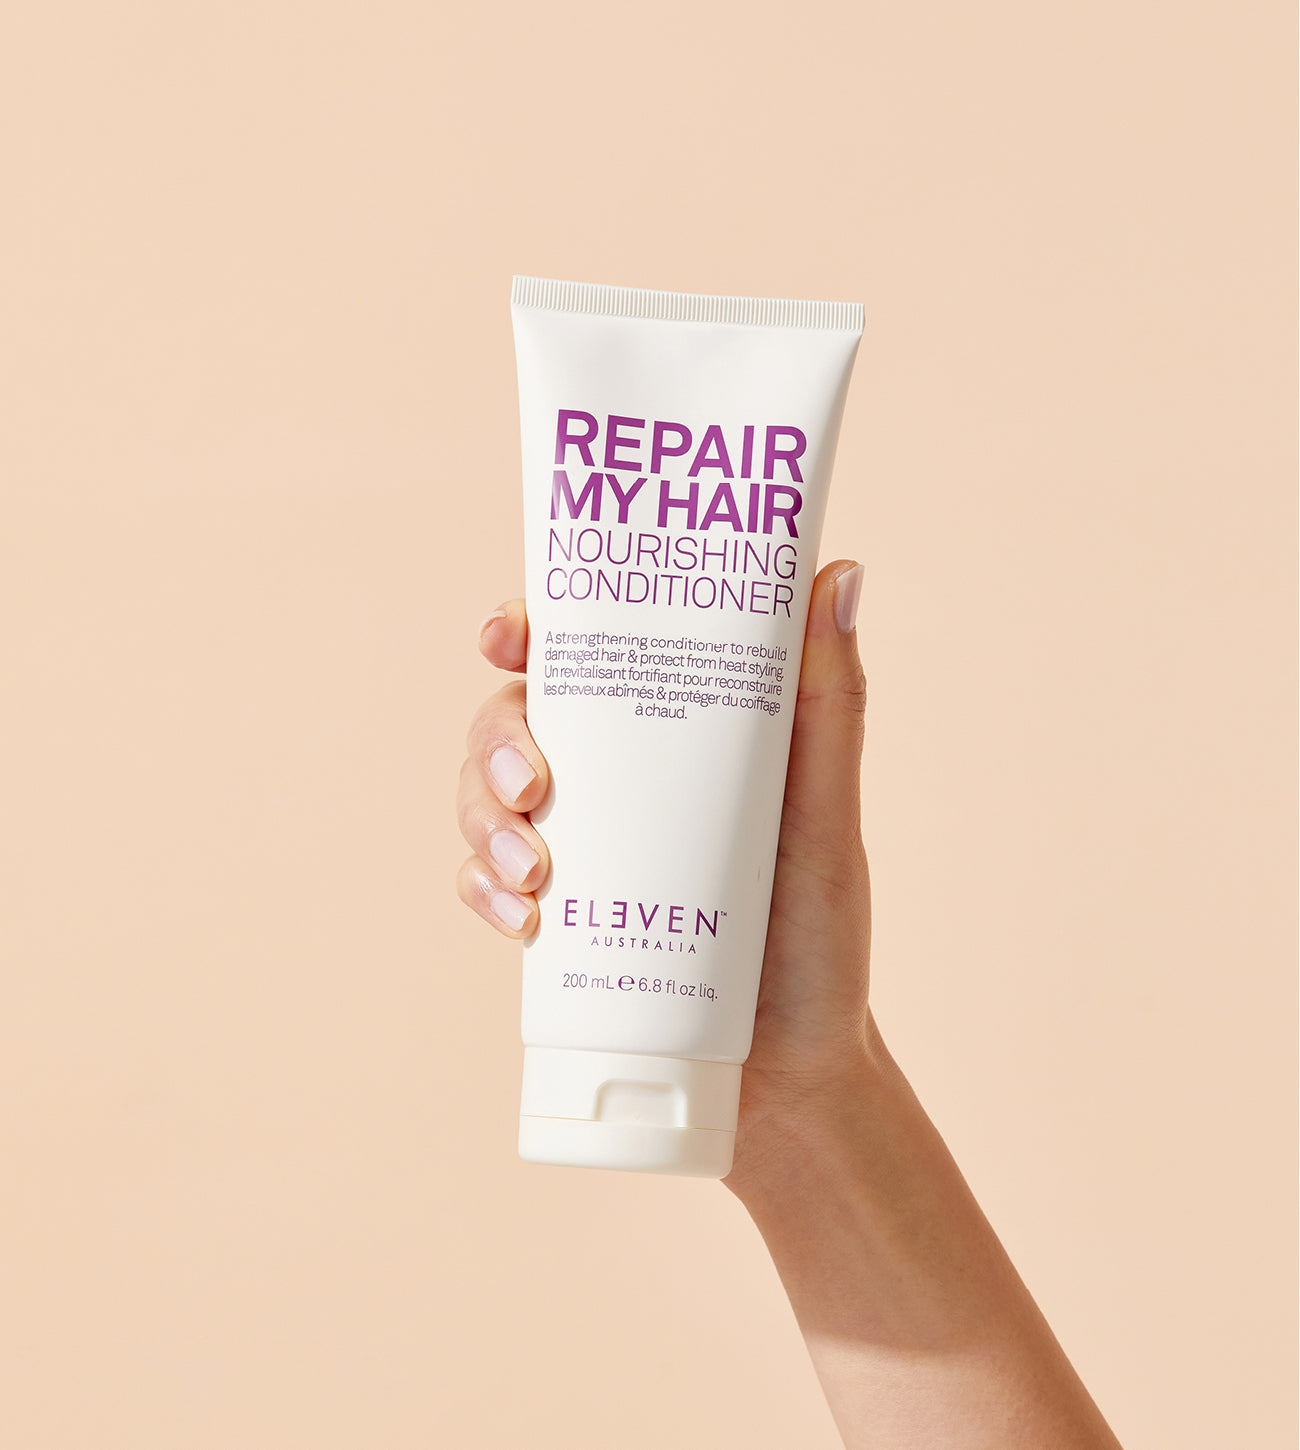 ELEVEN Hair REPAIR MY HAIR NOURISHING CONDITIONER repair damaged hair